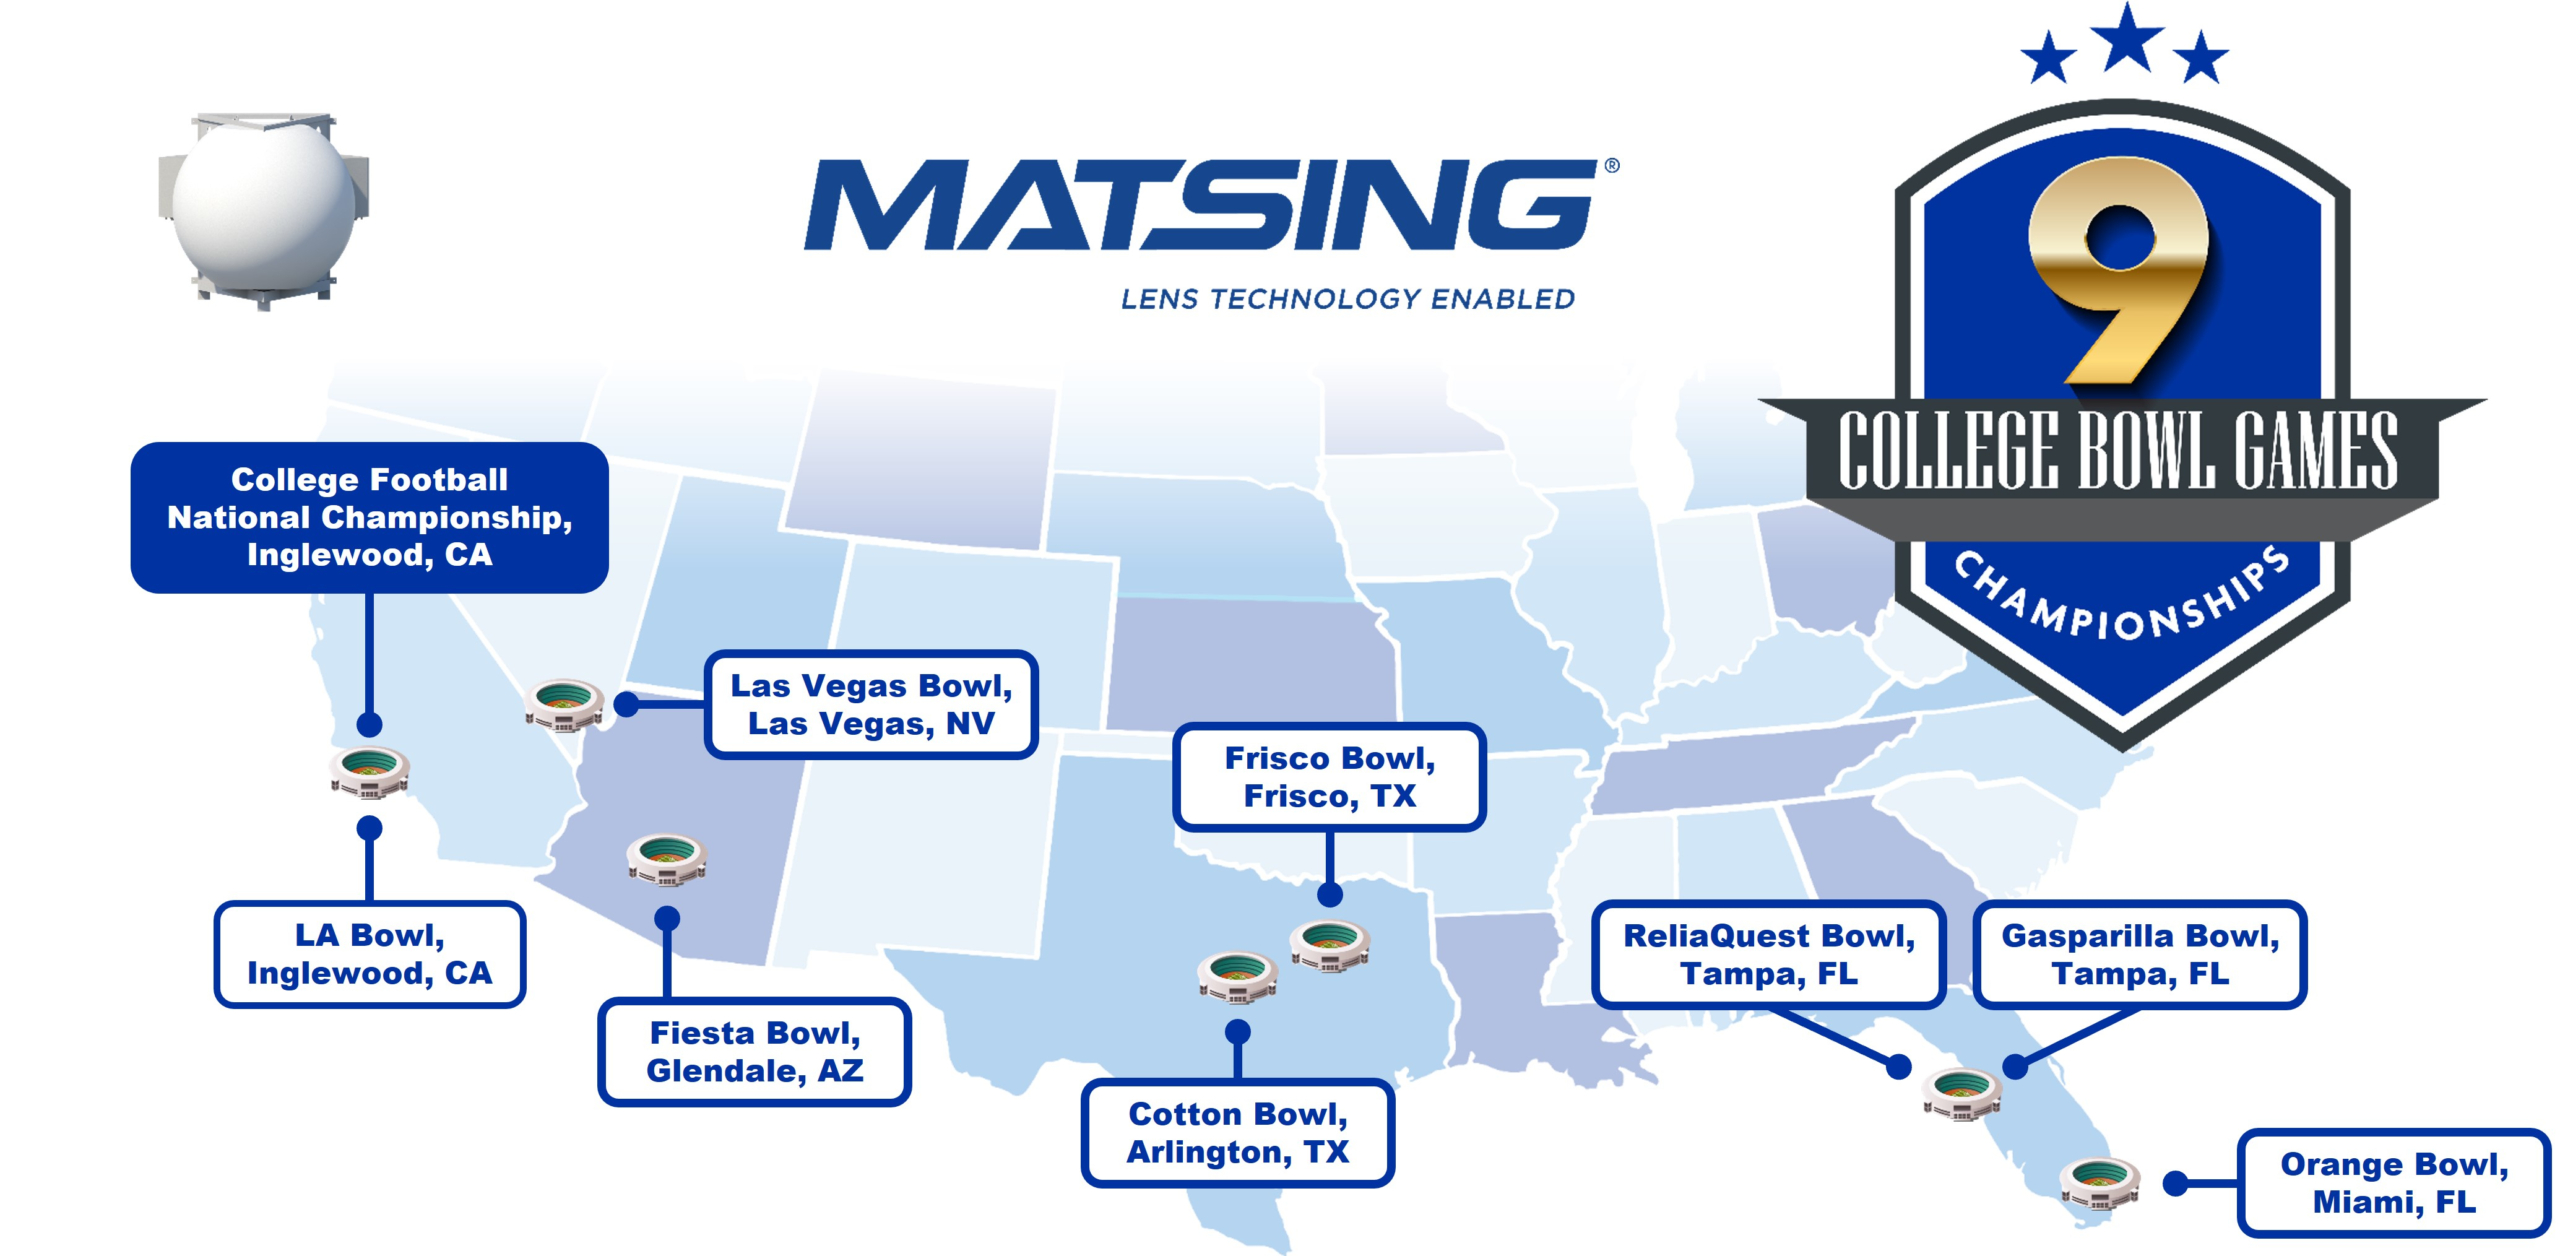 MatSing Lens Antennas Enhancing Fan Experience at 9 College Football Bowl Games